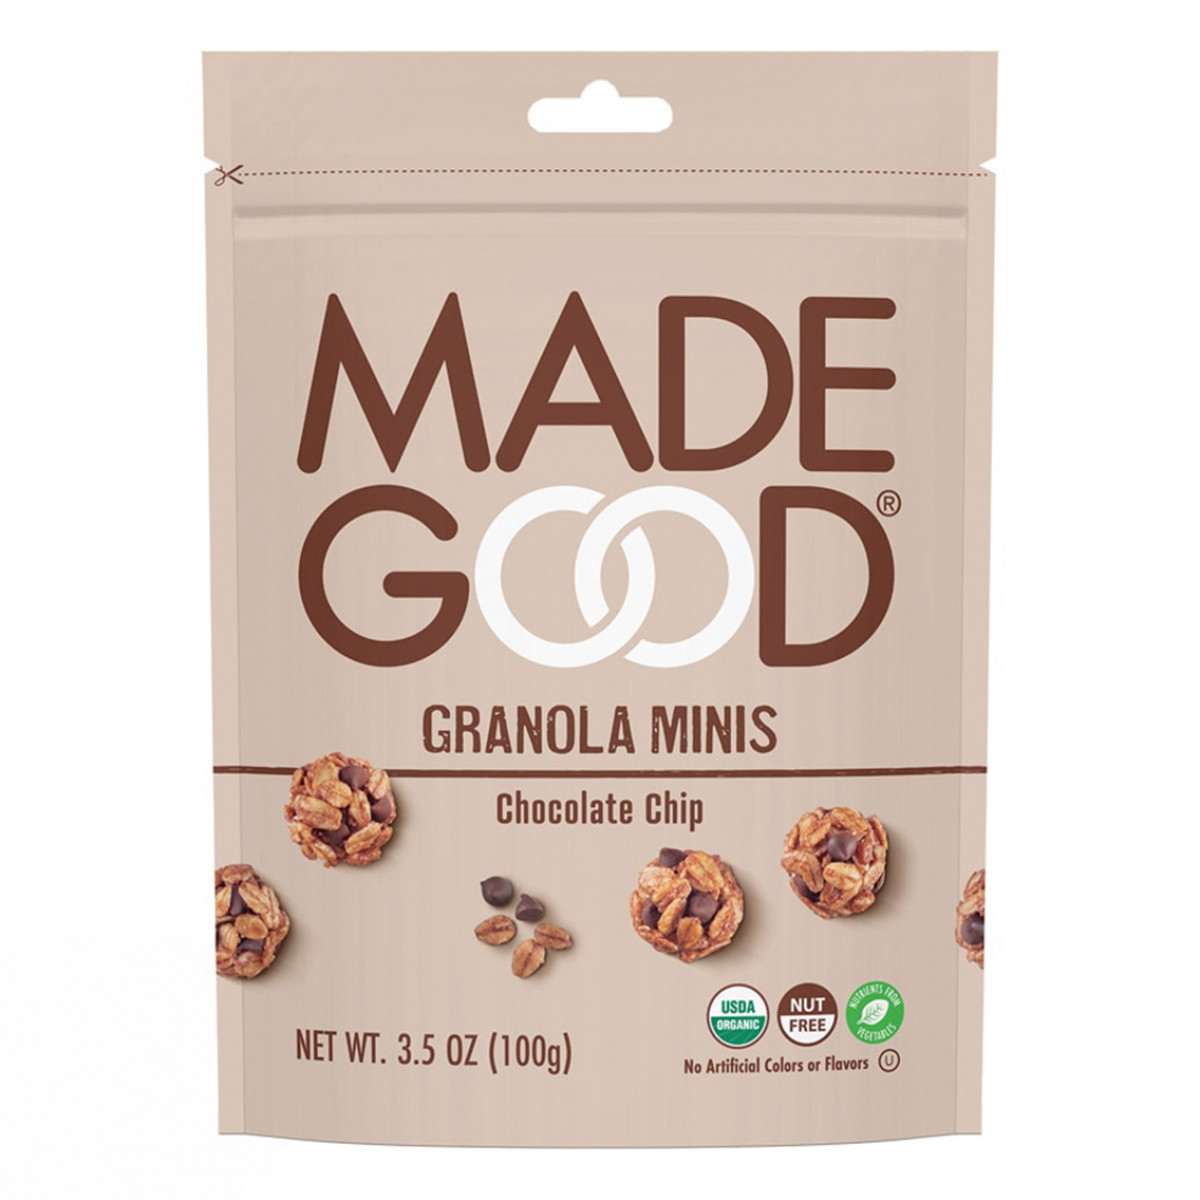 Granola Minis Chocolate Chip